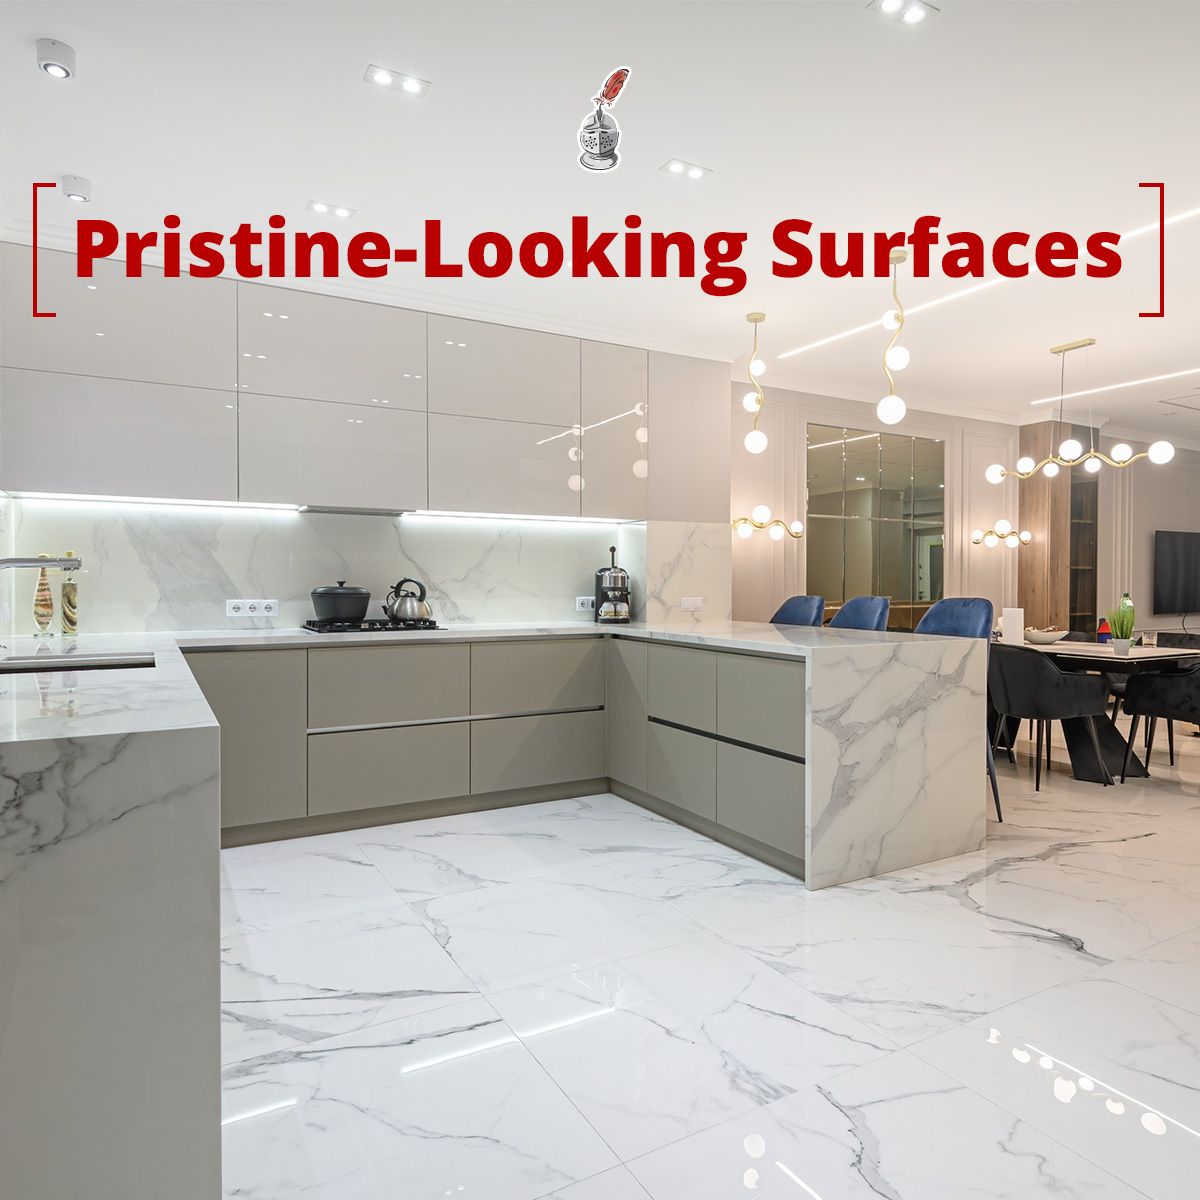 Pristine-Looking Surfaces